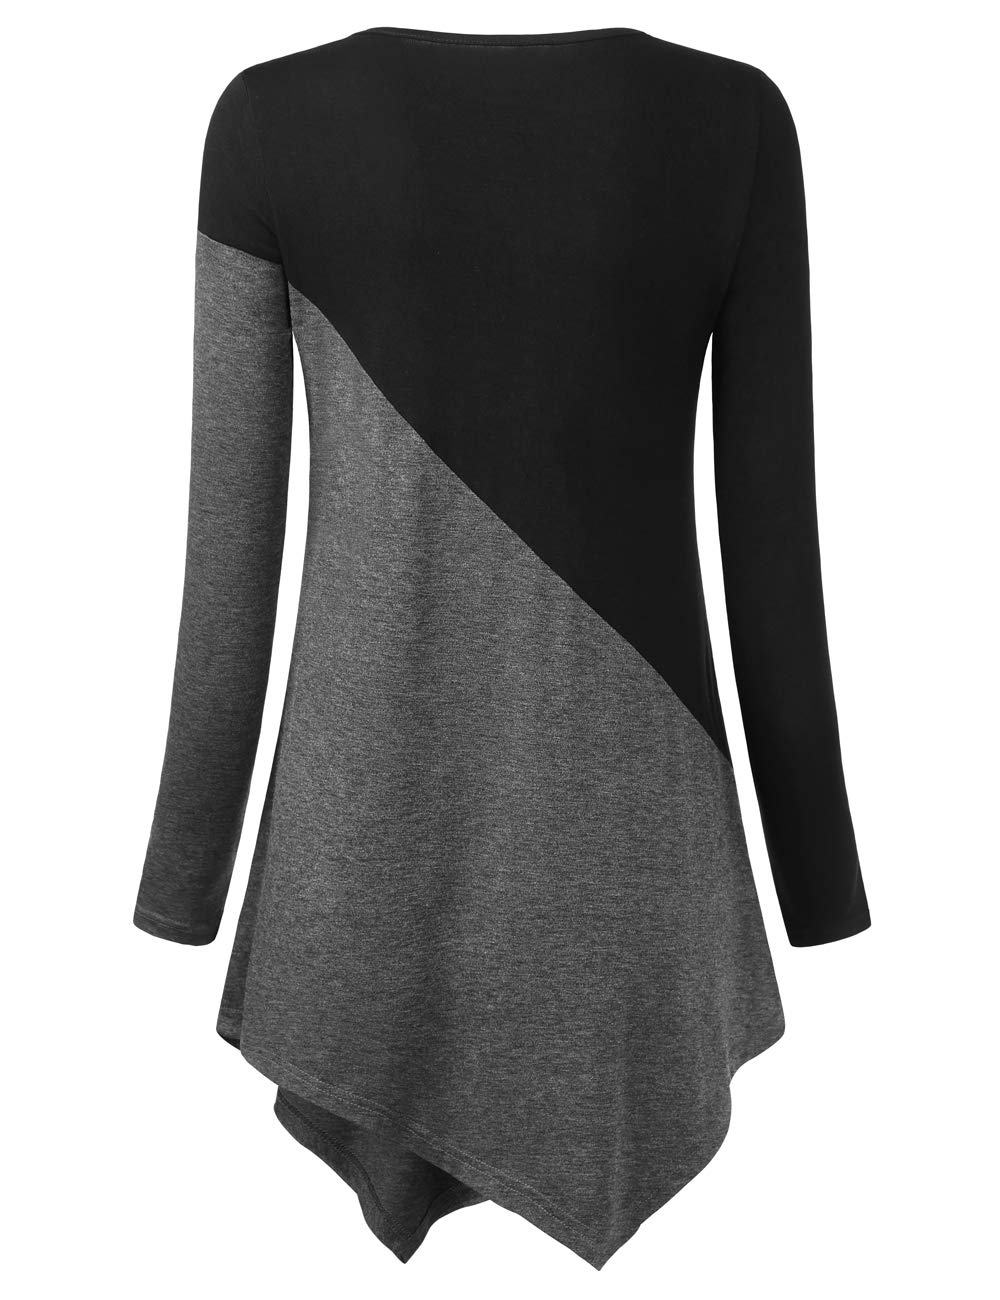 DJT Long Sleeve Black Heather Grey Women's Tunic Shirts Scoop Neck Hanky Hem Color Block Stretch Casual Fall T Shirt Tops